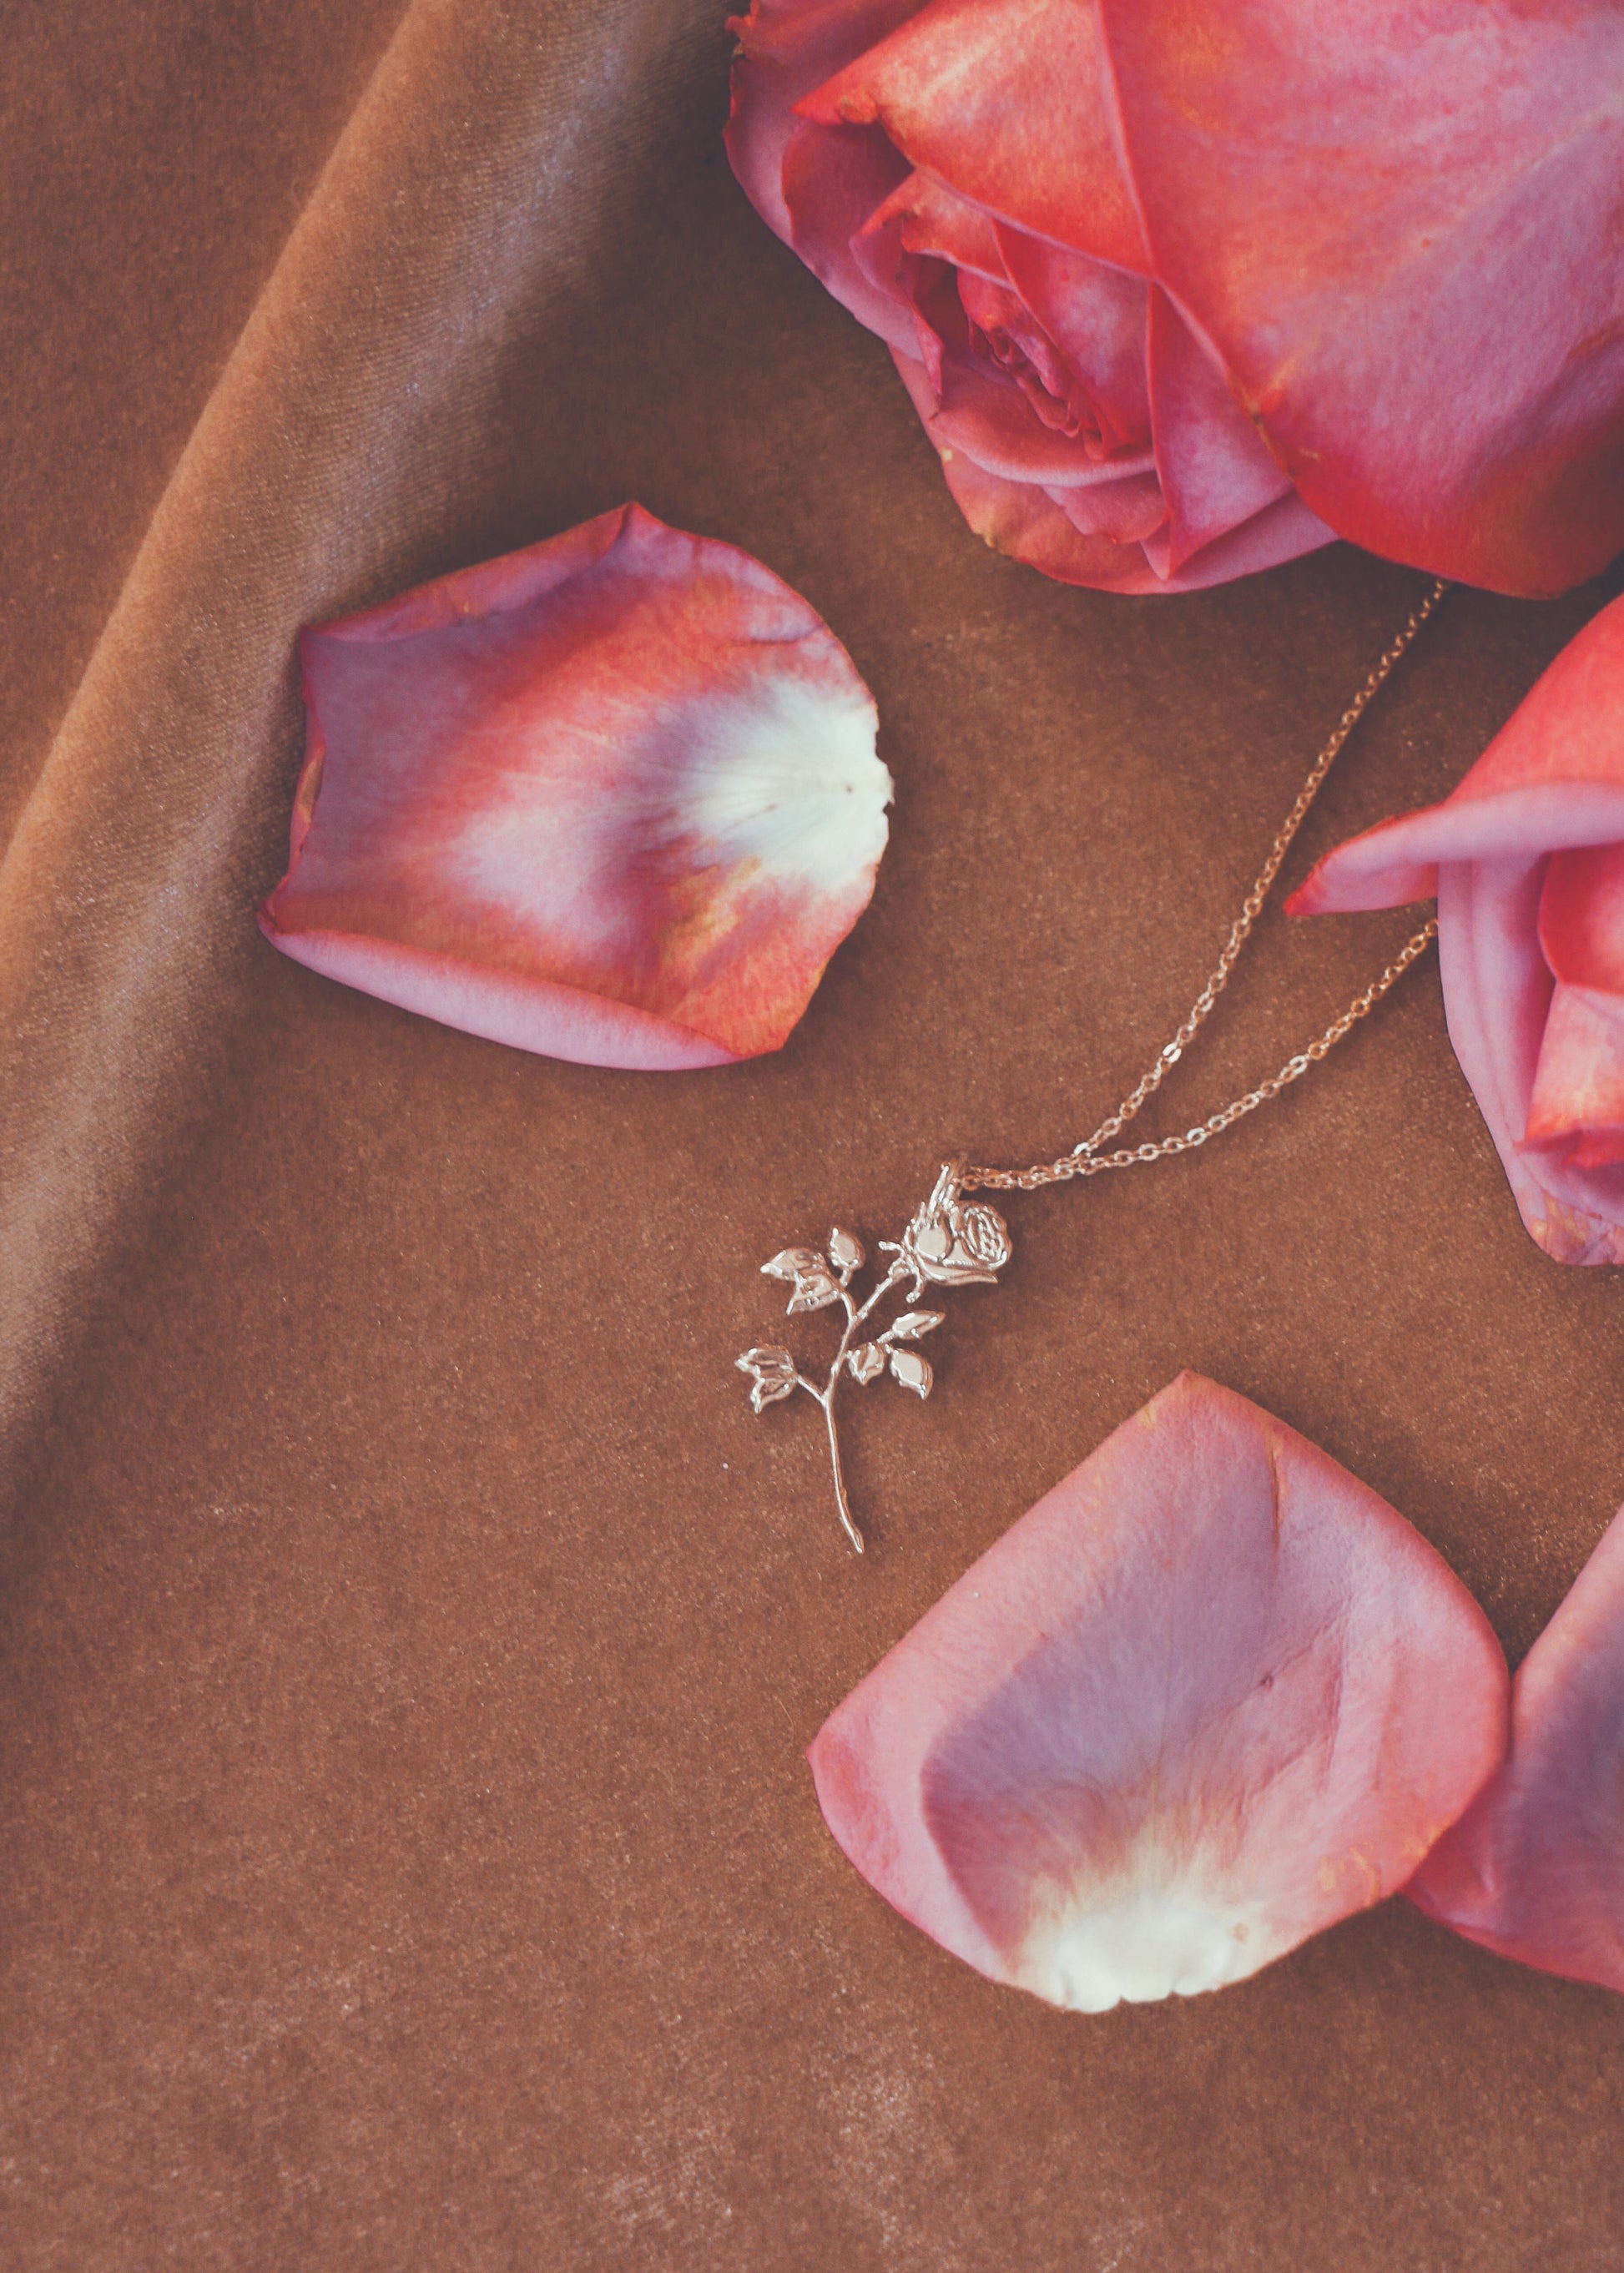  Jewelry - Rose Necklace - REDWOLF